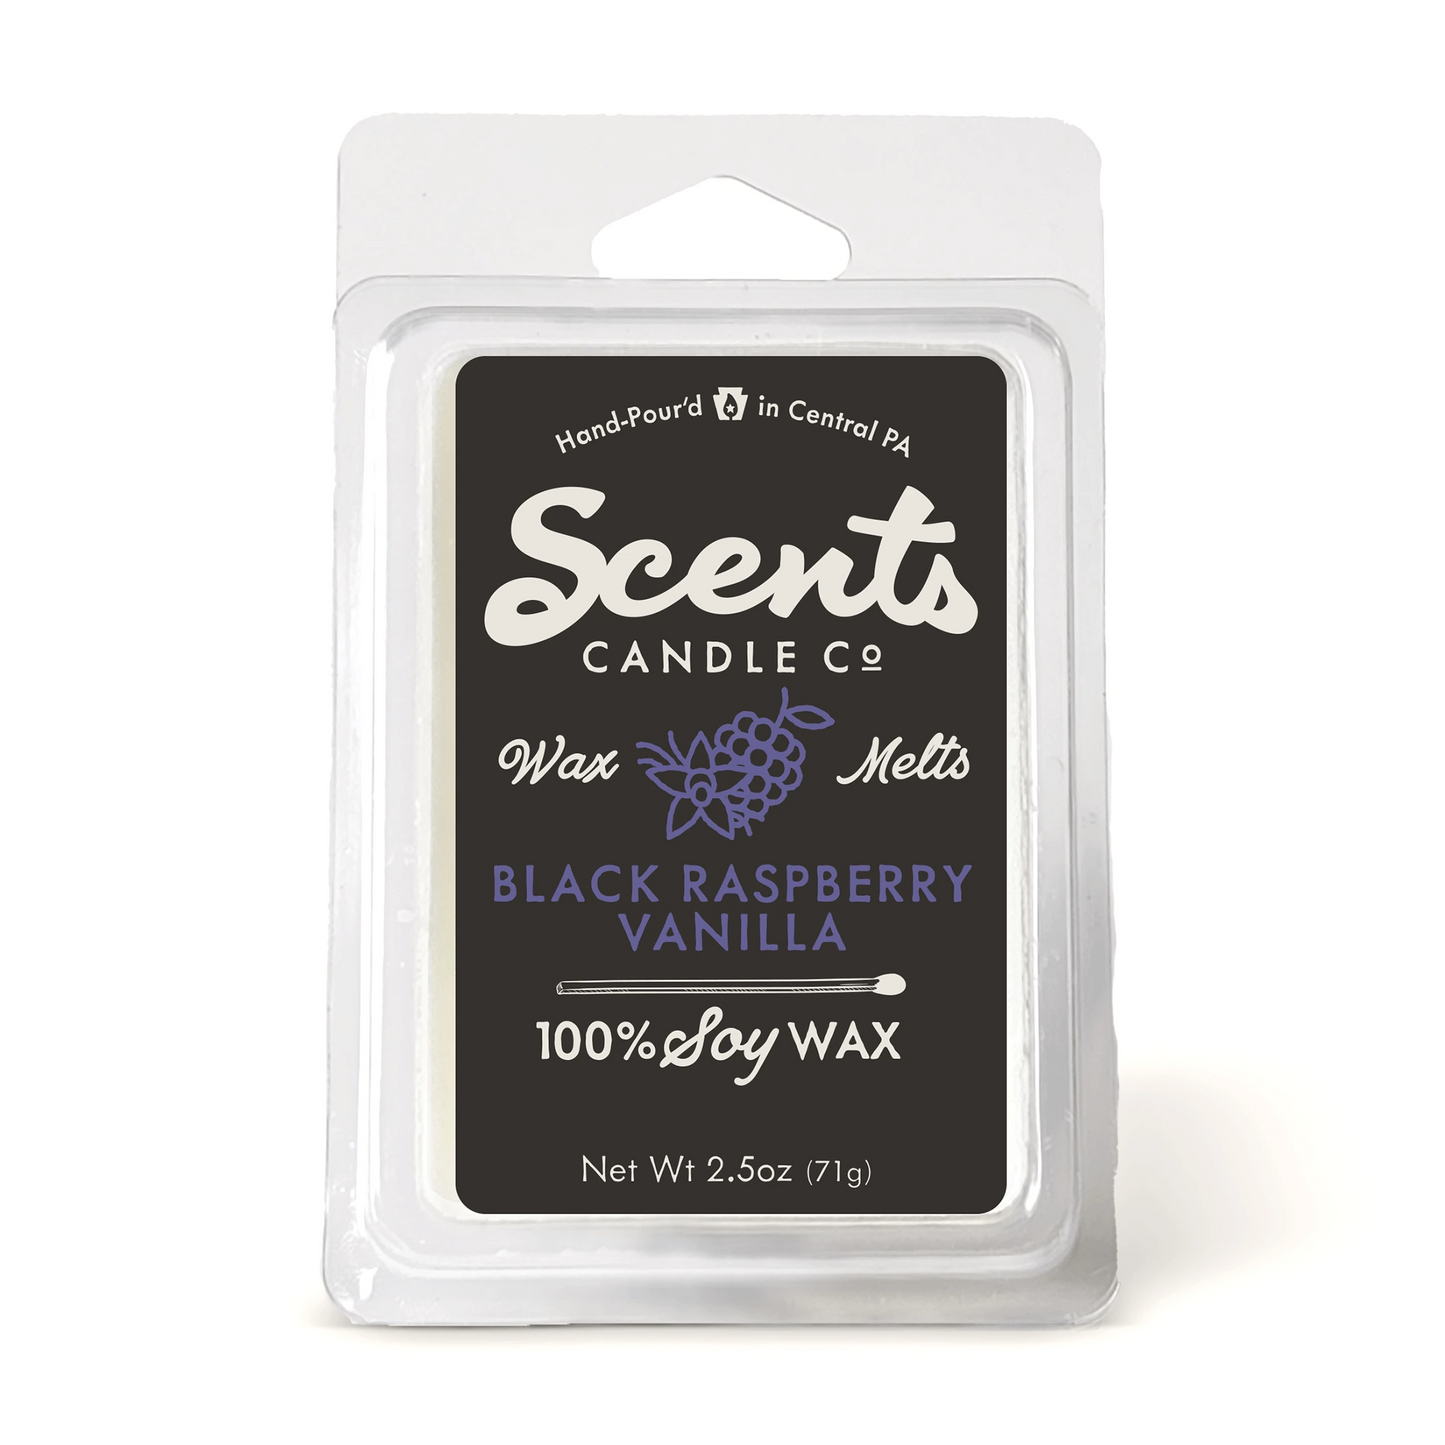 Scents Candle Co. Black Raspberry Vanilla Wax Melt